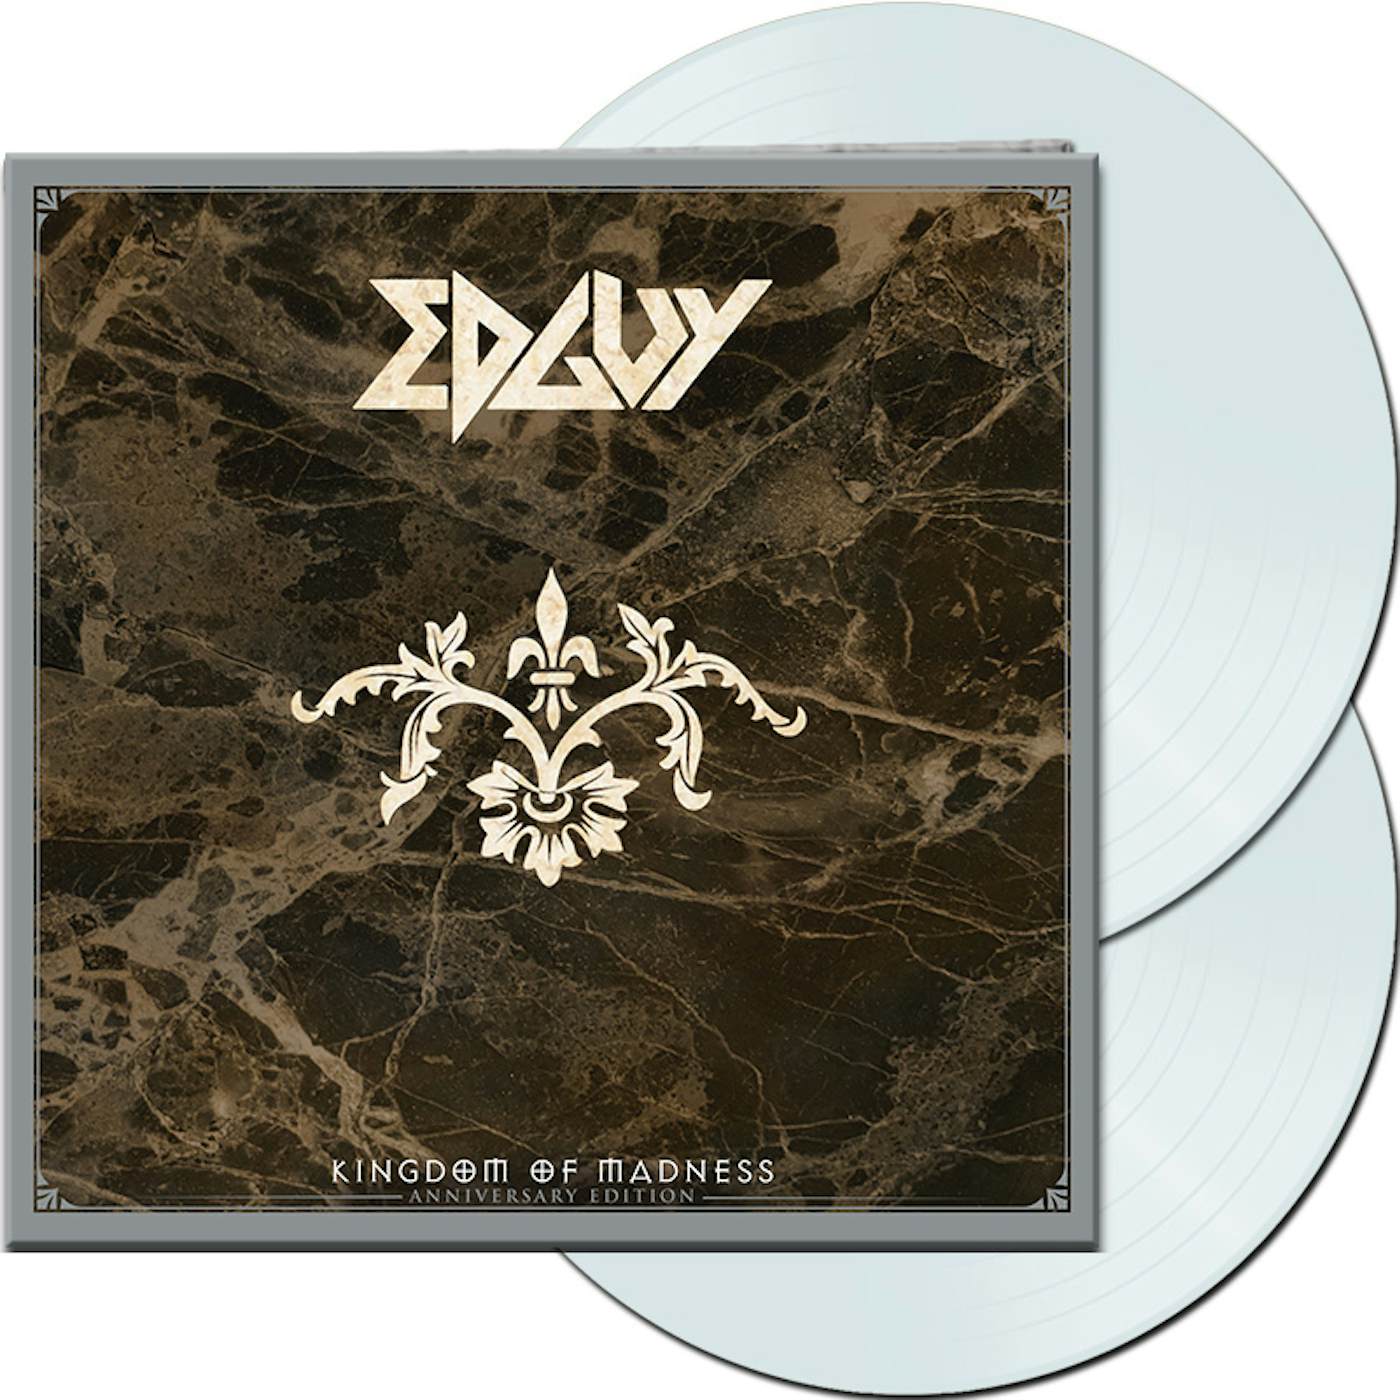 Edguy Kingdom of Madness Vinyl Record